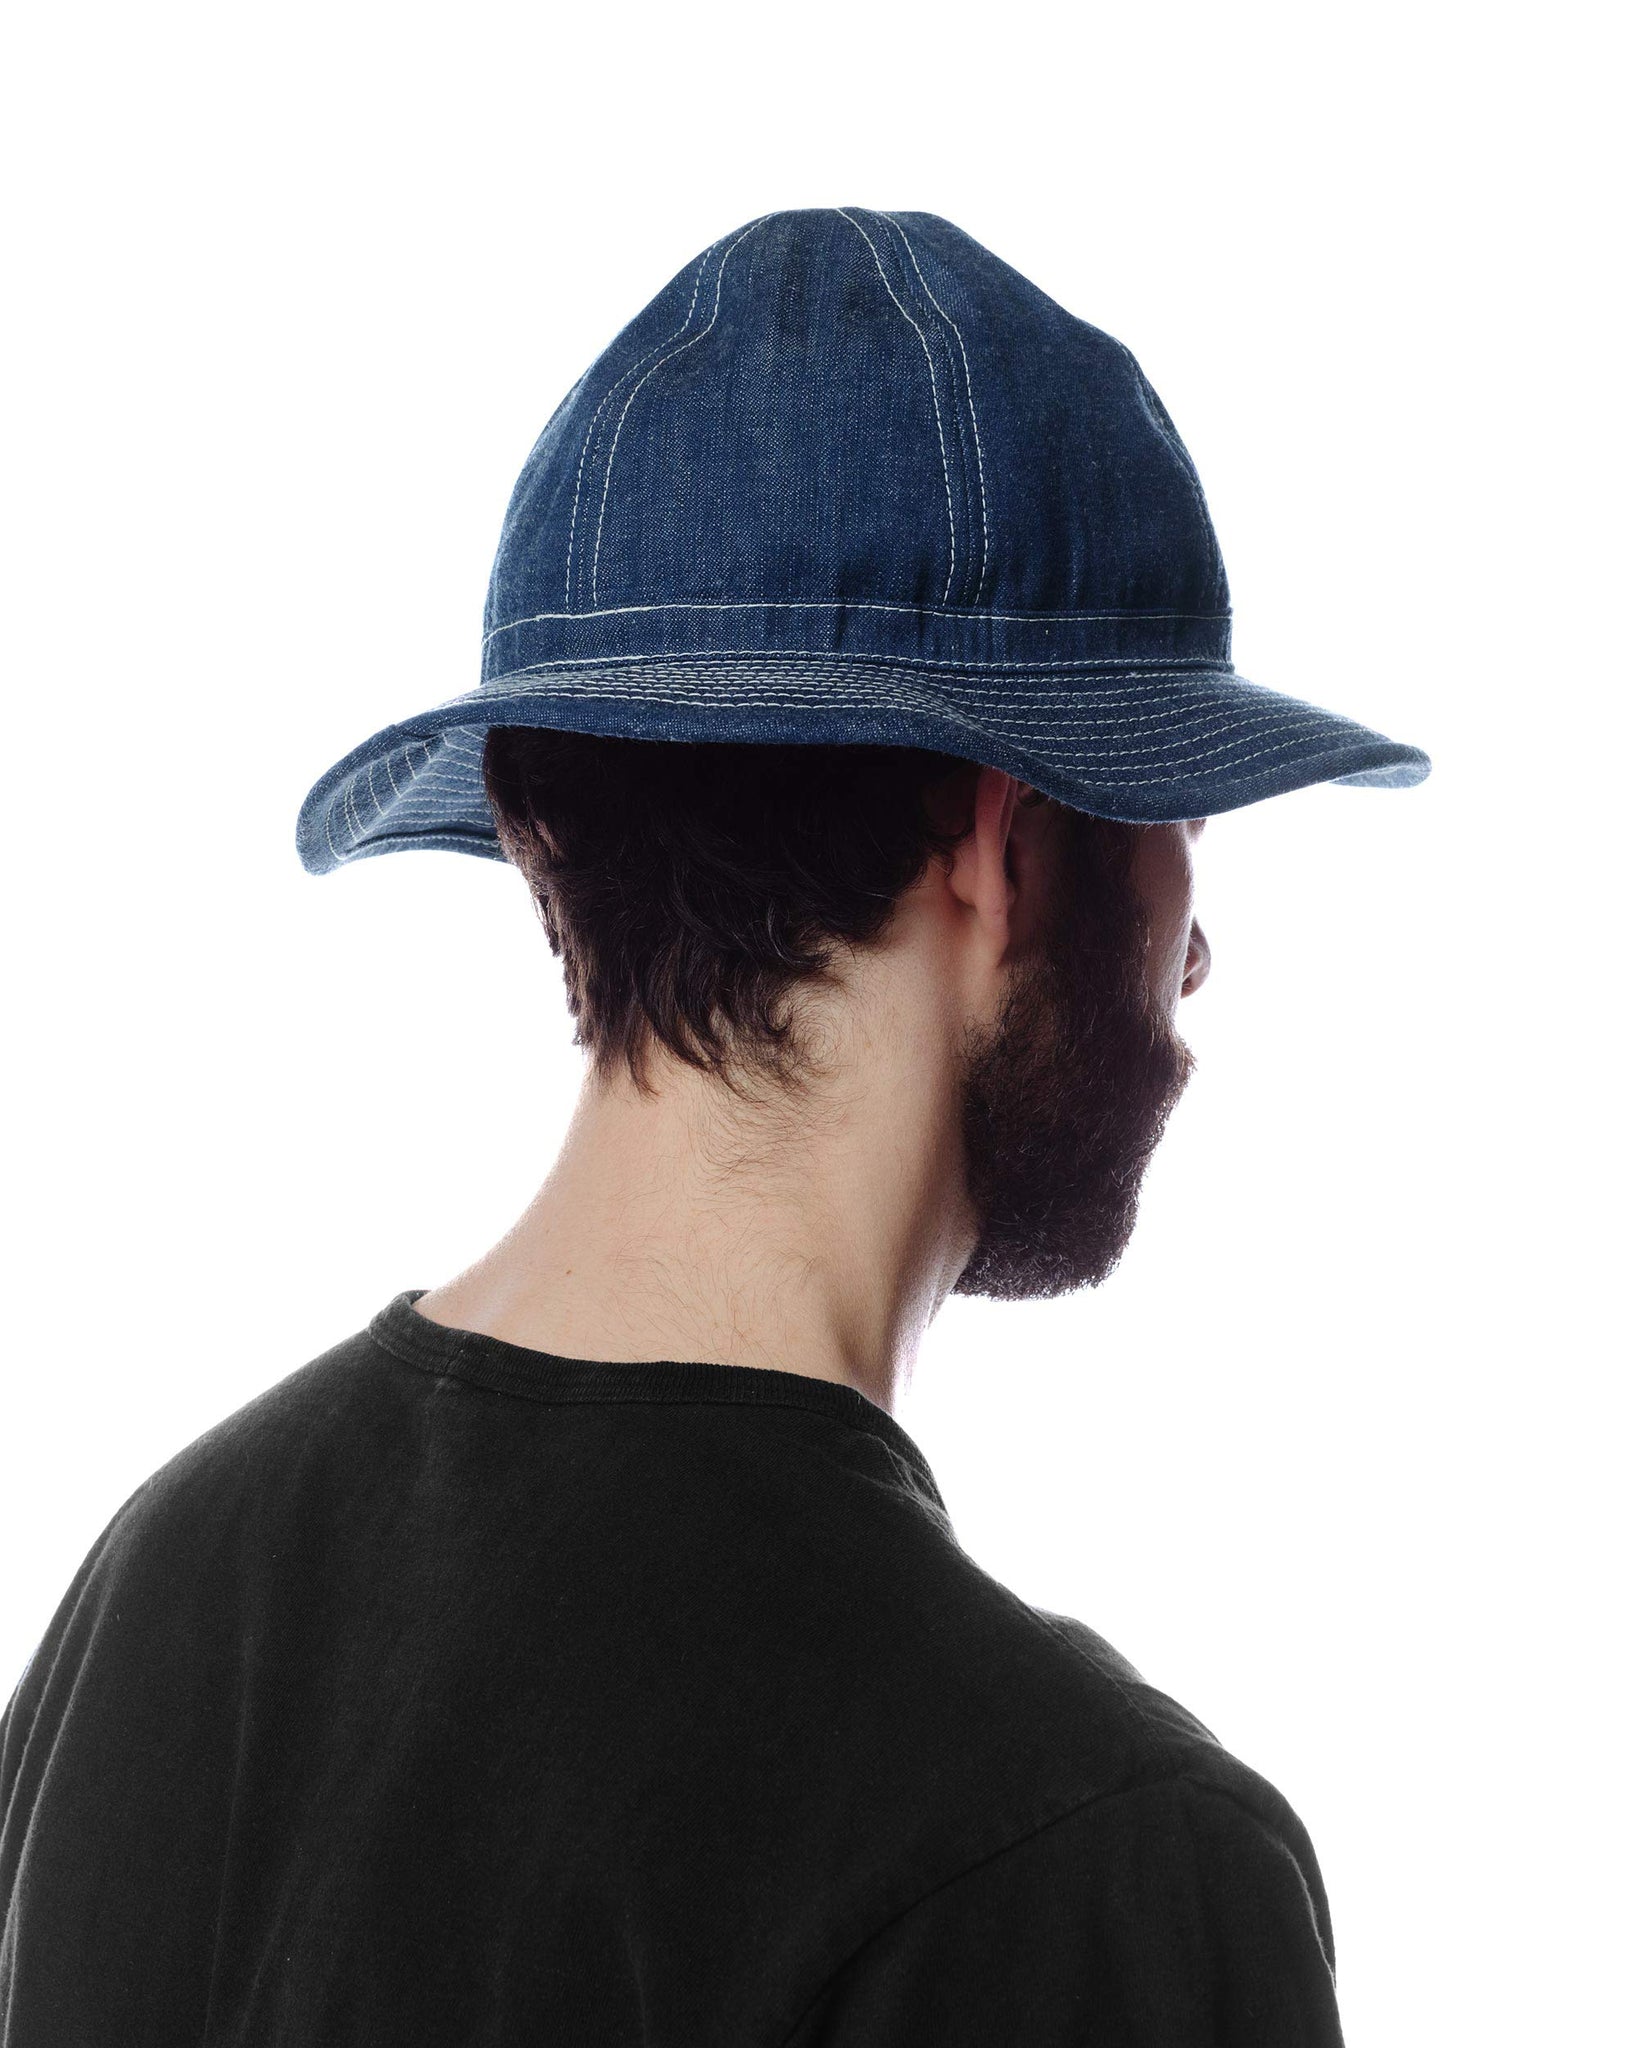 The Real McCoy's MA23002 Hat, Working, Denim, Blue Indigo Back